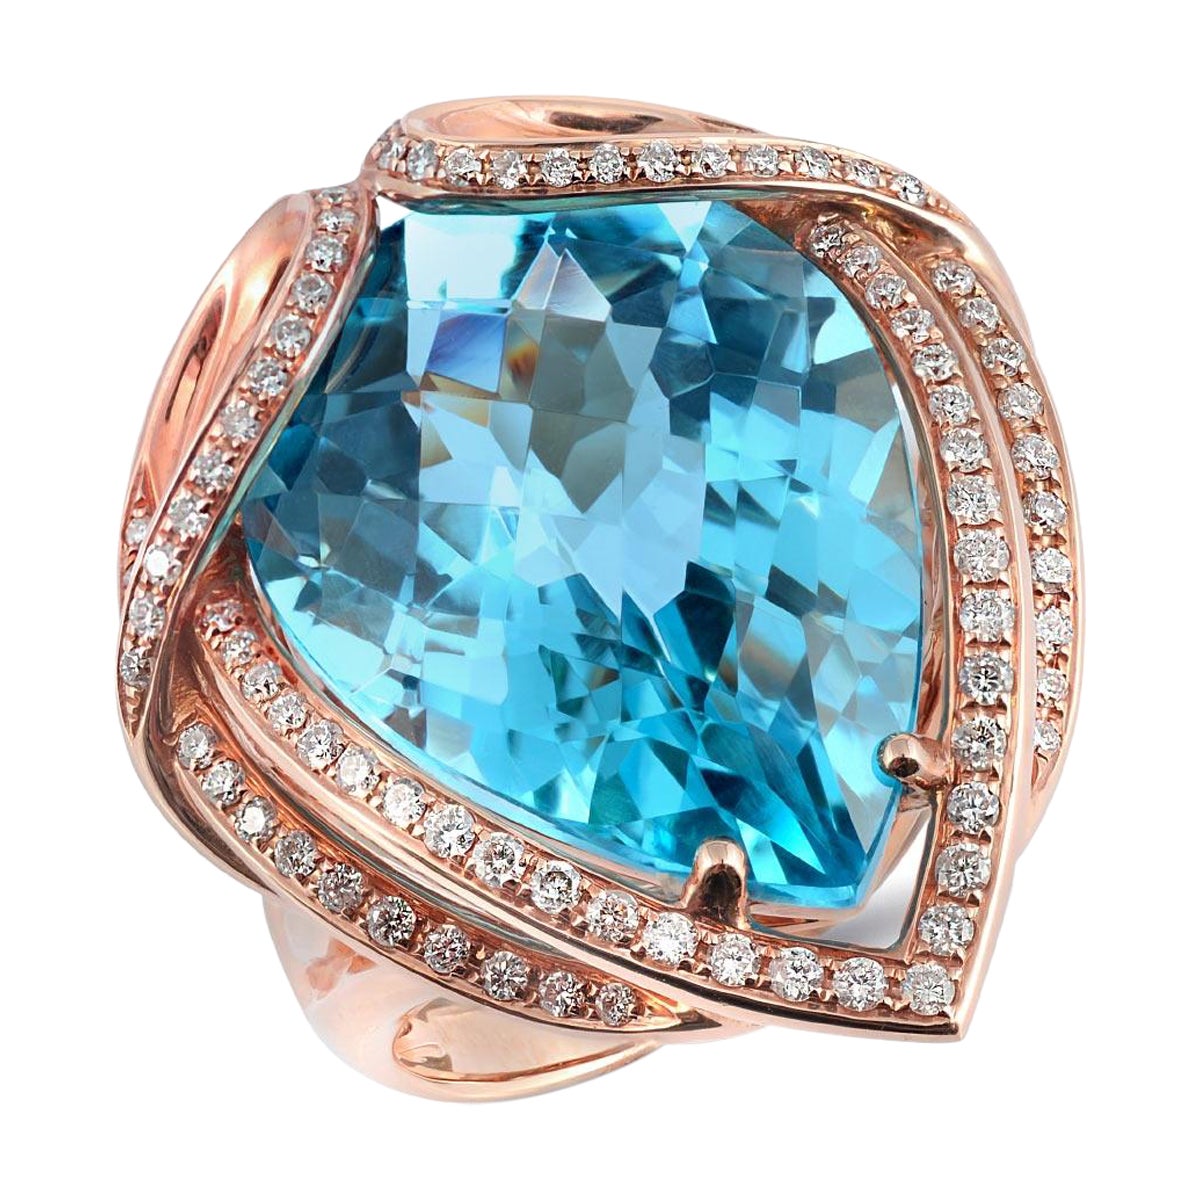  20.16 Carat Blue Topaz Diamonds set in 18K Rose Gold Ring  For Sale